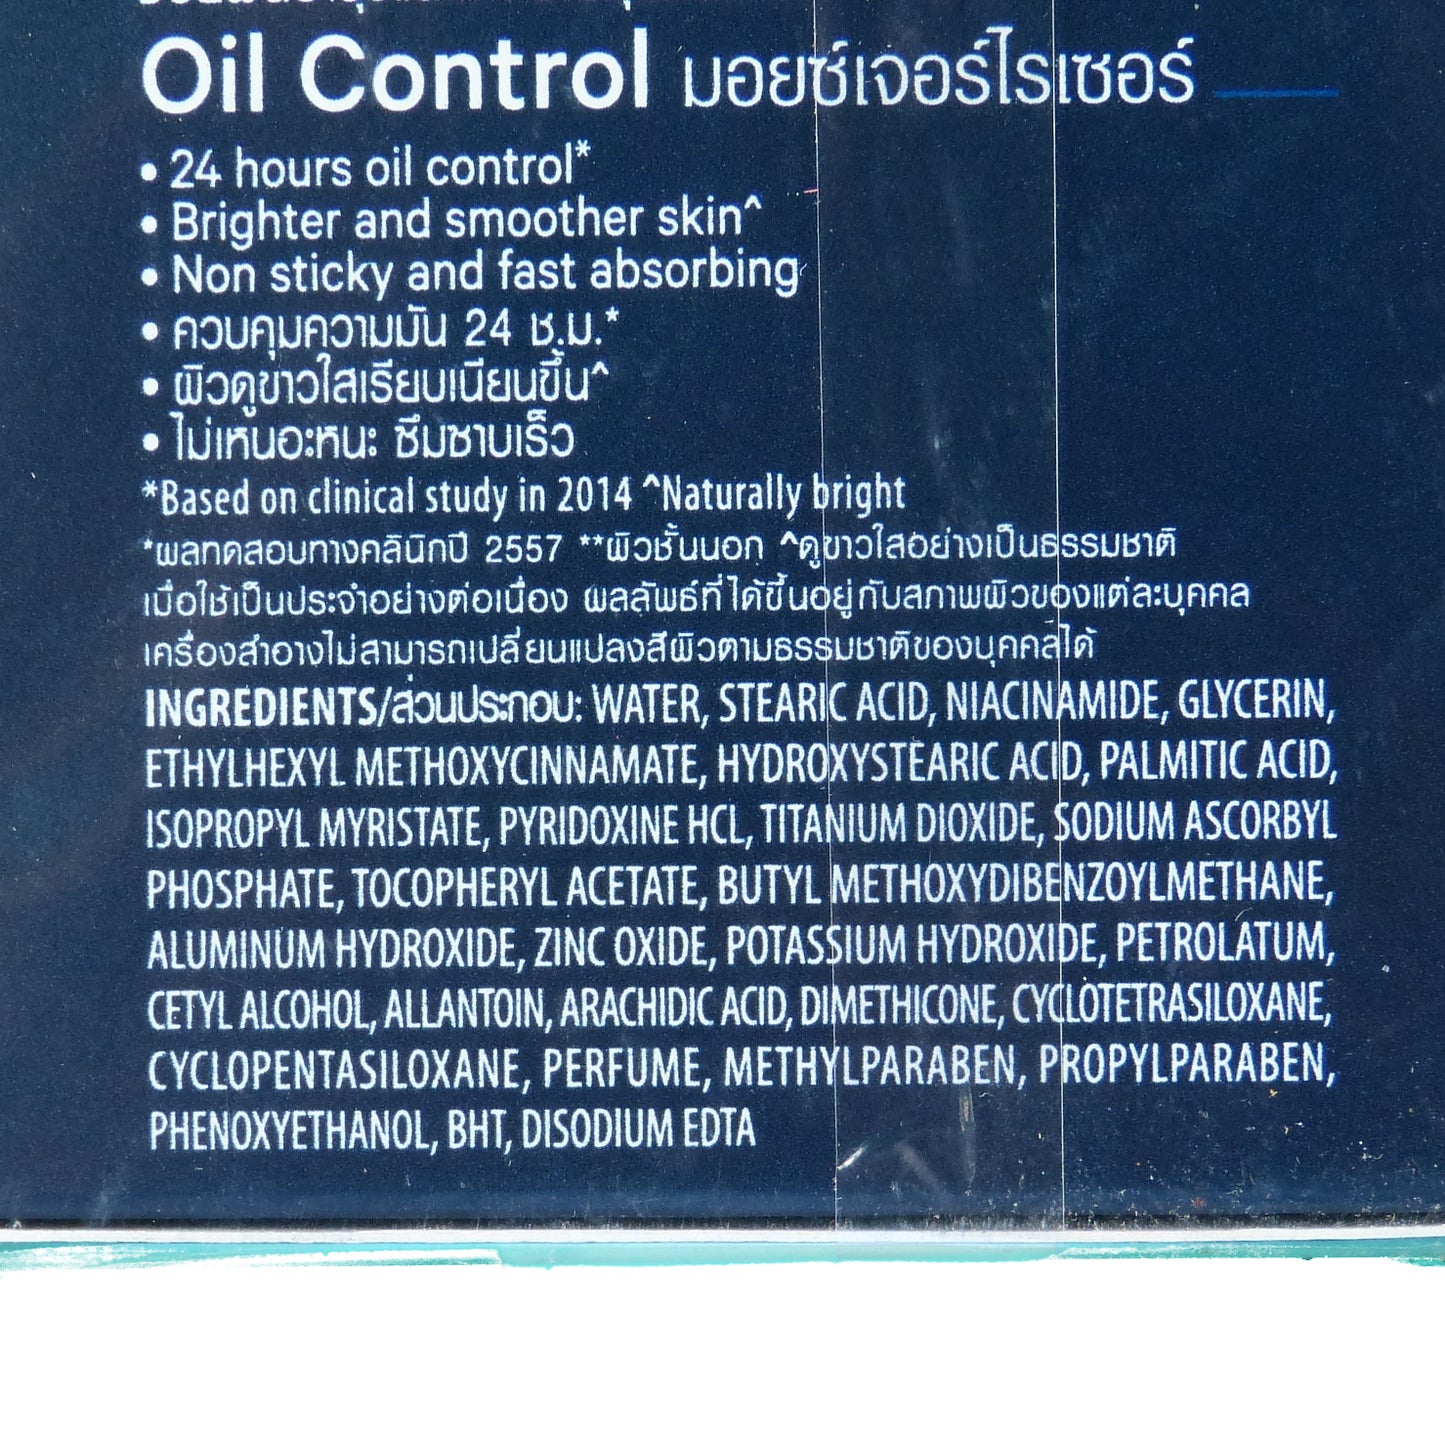 Vaseline Men Oil Control Brightening Moisturizer 50 grams - Asian Beauty Supply